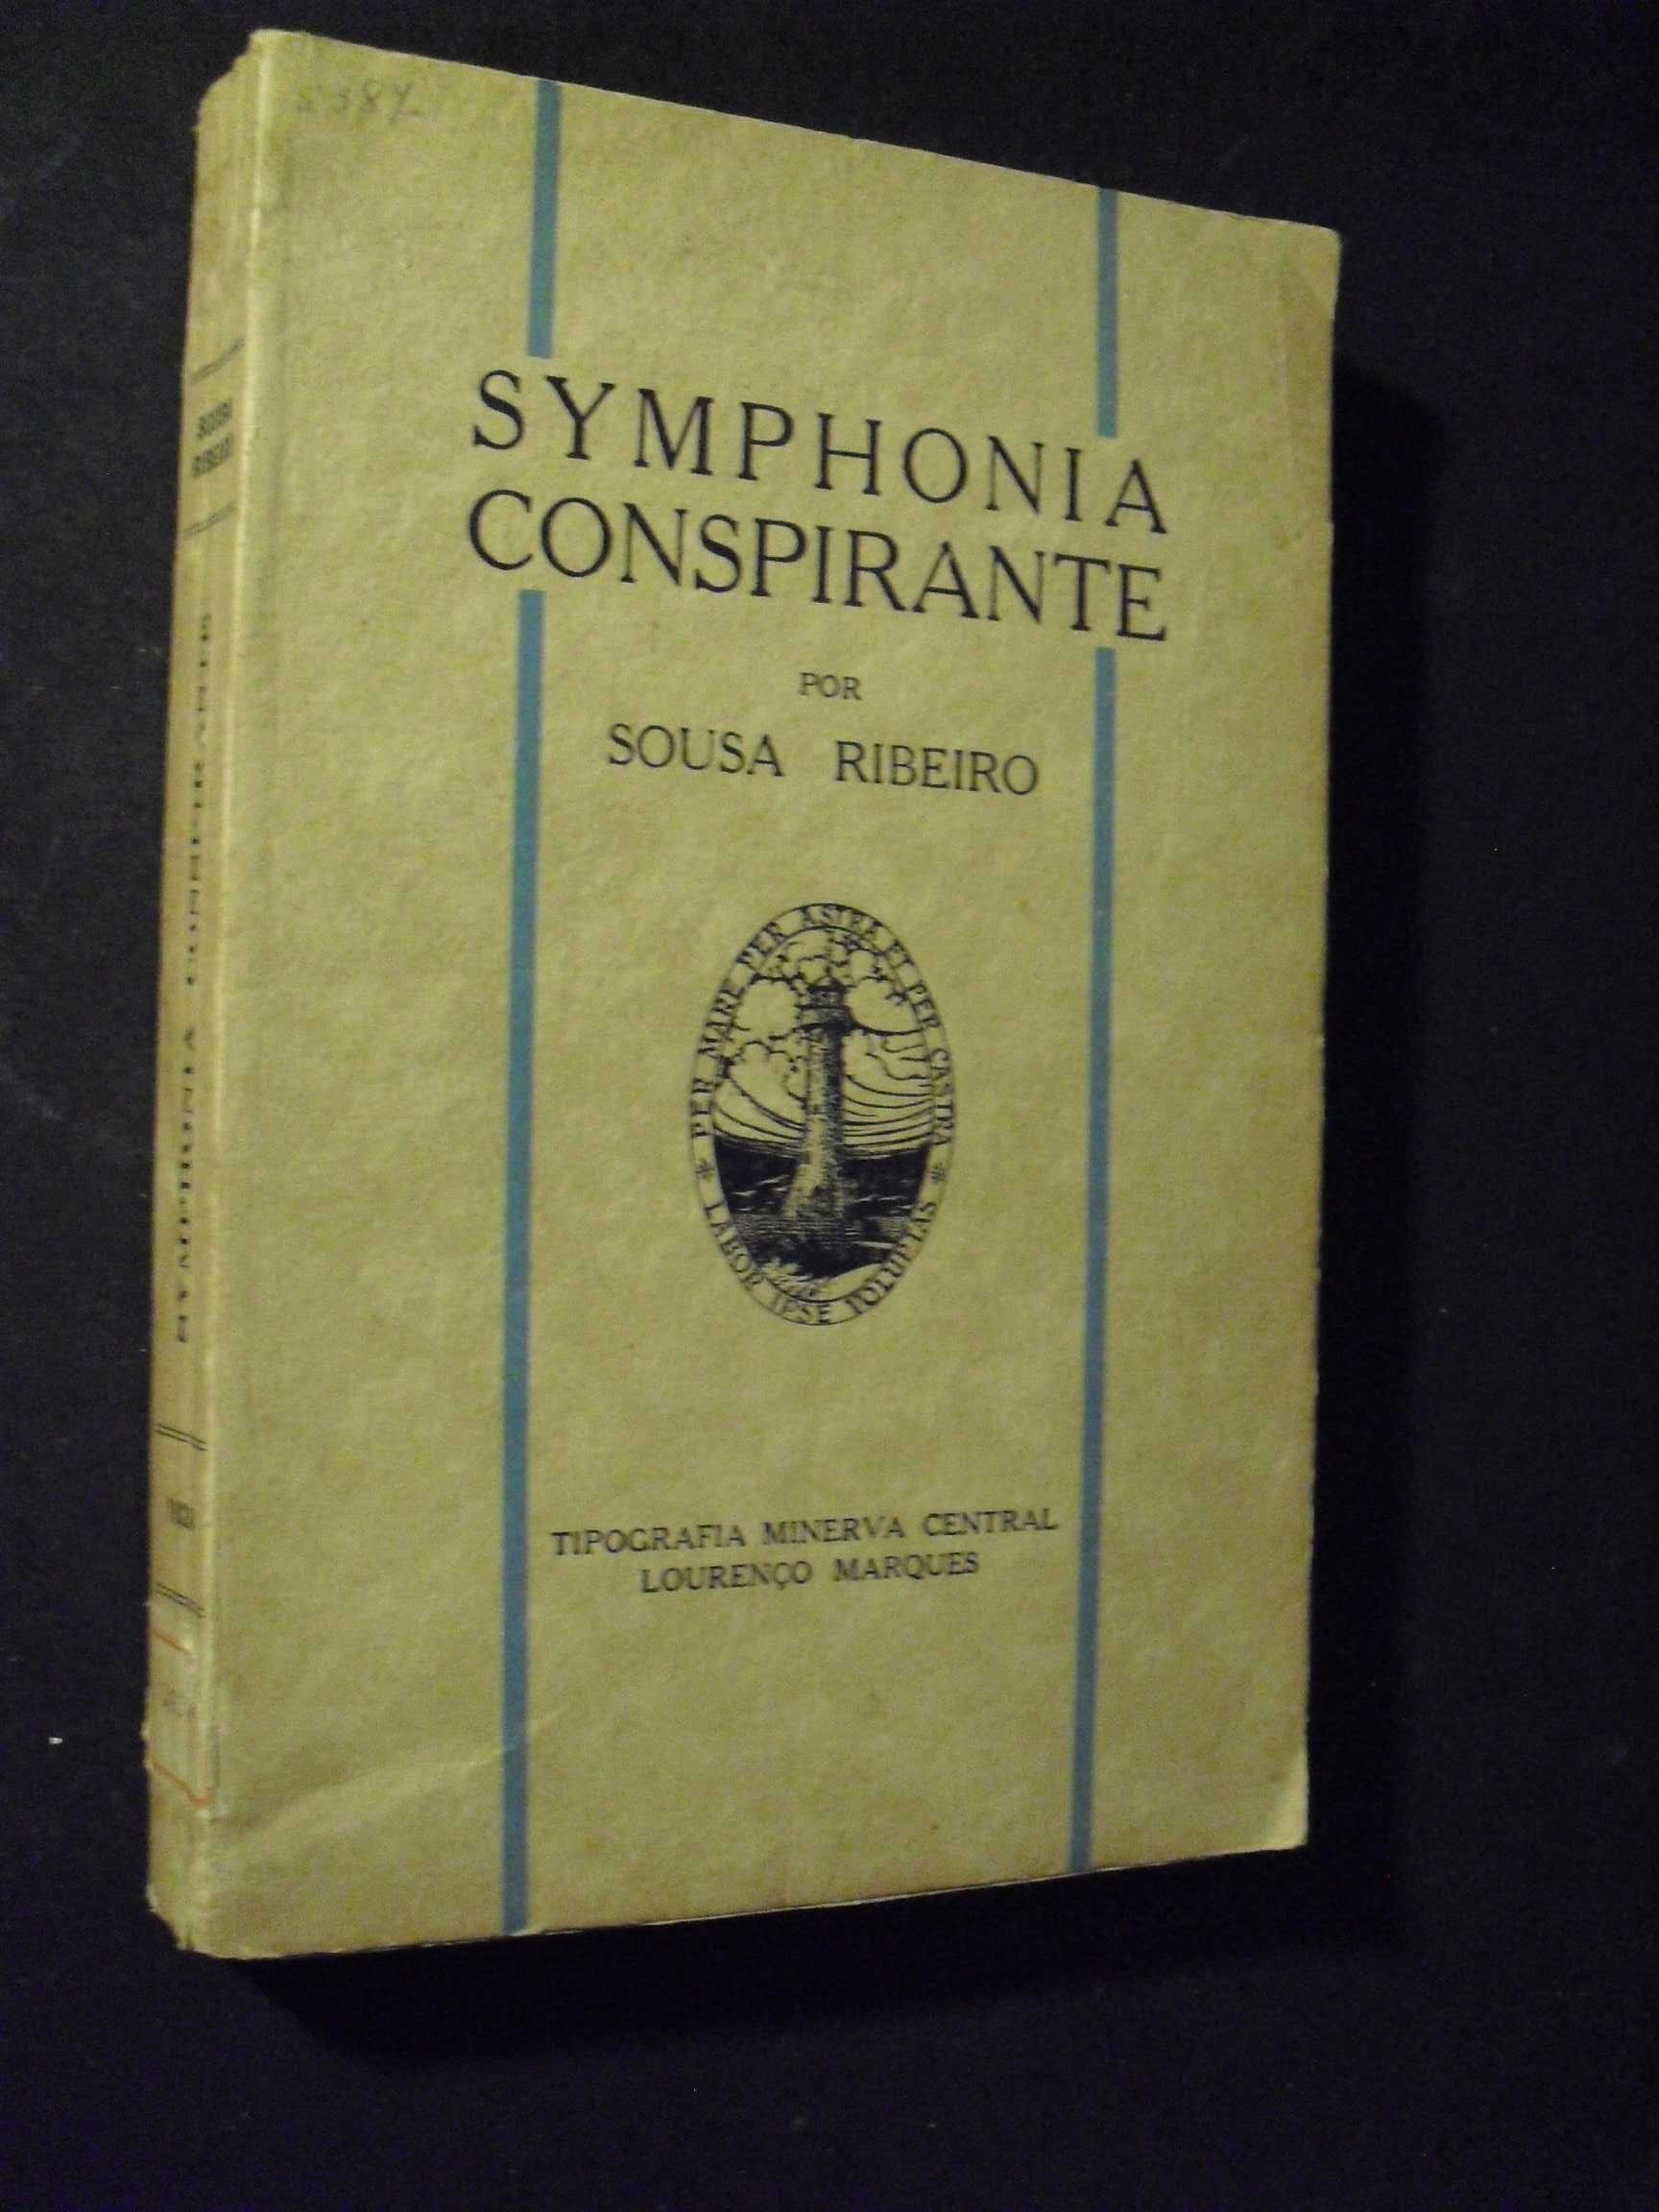 Ribeiro (Sousa);Symphonia Conspirante;Tipog Central,Lourenço Marques